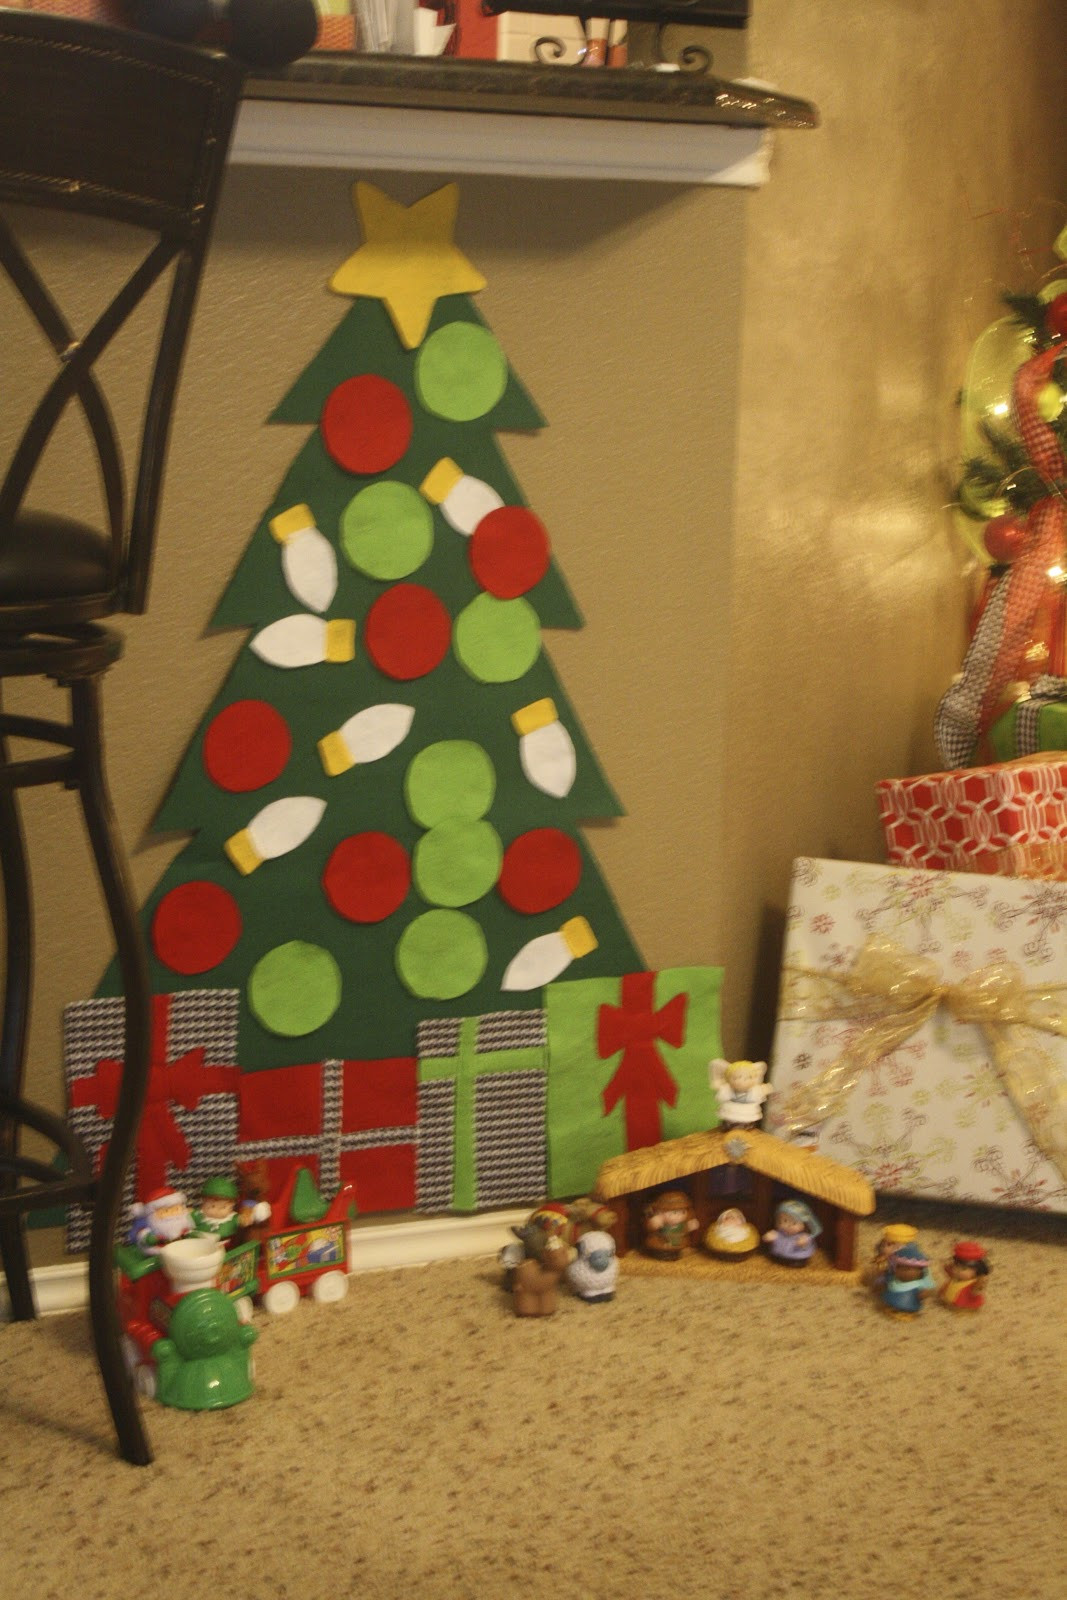 Best ideas about DIY Felt Christmas Tree
. Save or Pin The Link Home DIY felt Christmas tree Now.